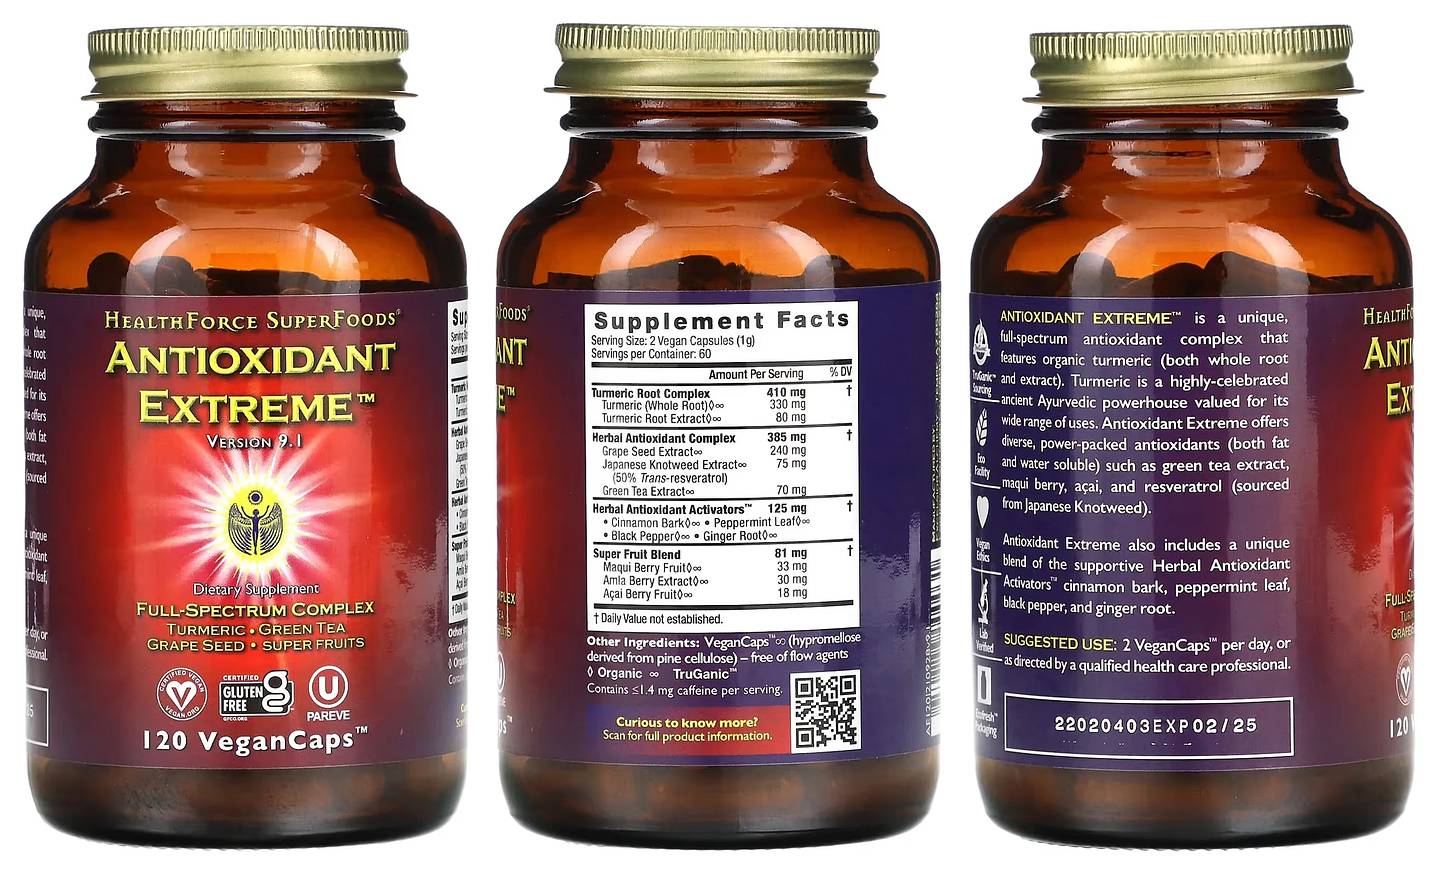 HealthForce Superfoods, Antioxidant Extreme packaging